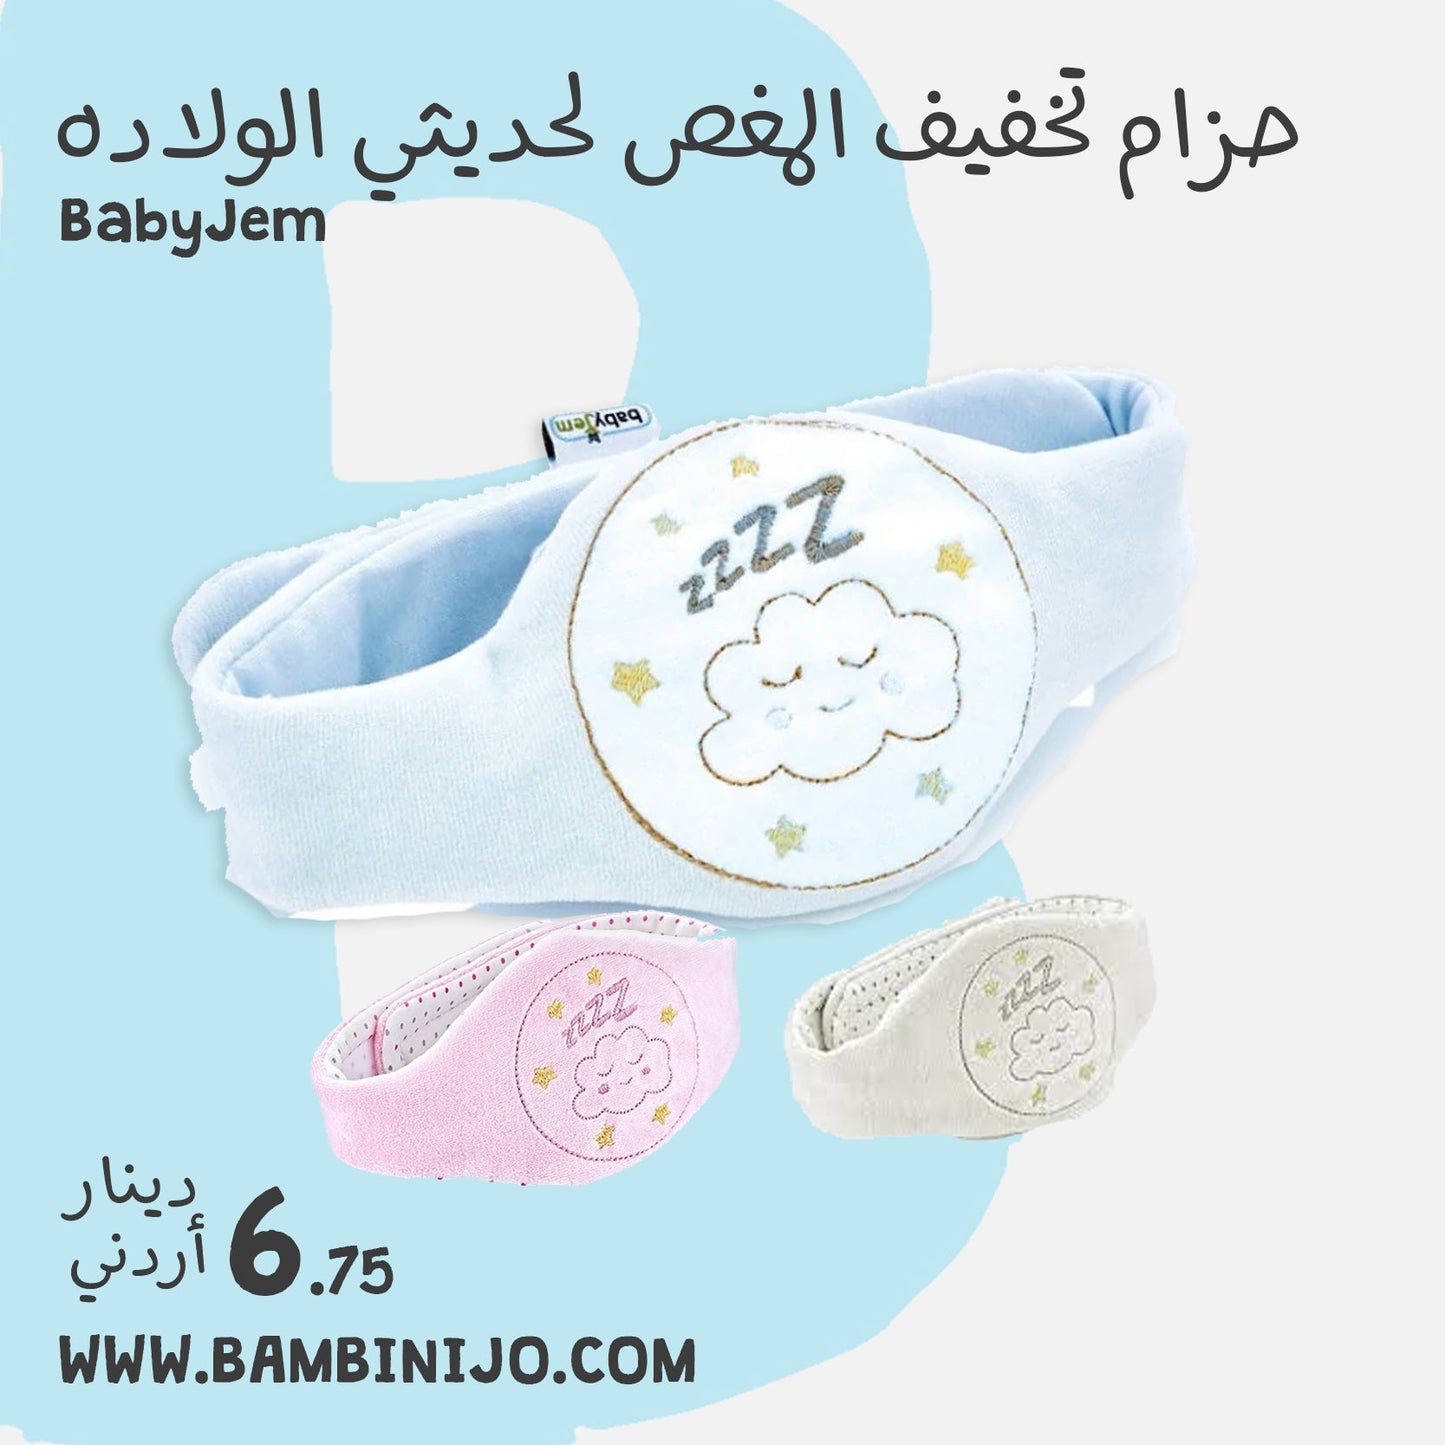 BabyJem - Cherry Core Filled Colic Belt - Ecru - BambiniJO | Buy Online | Jordan